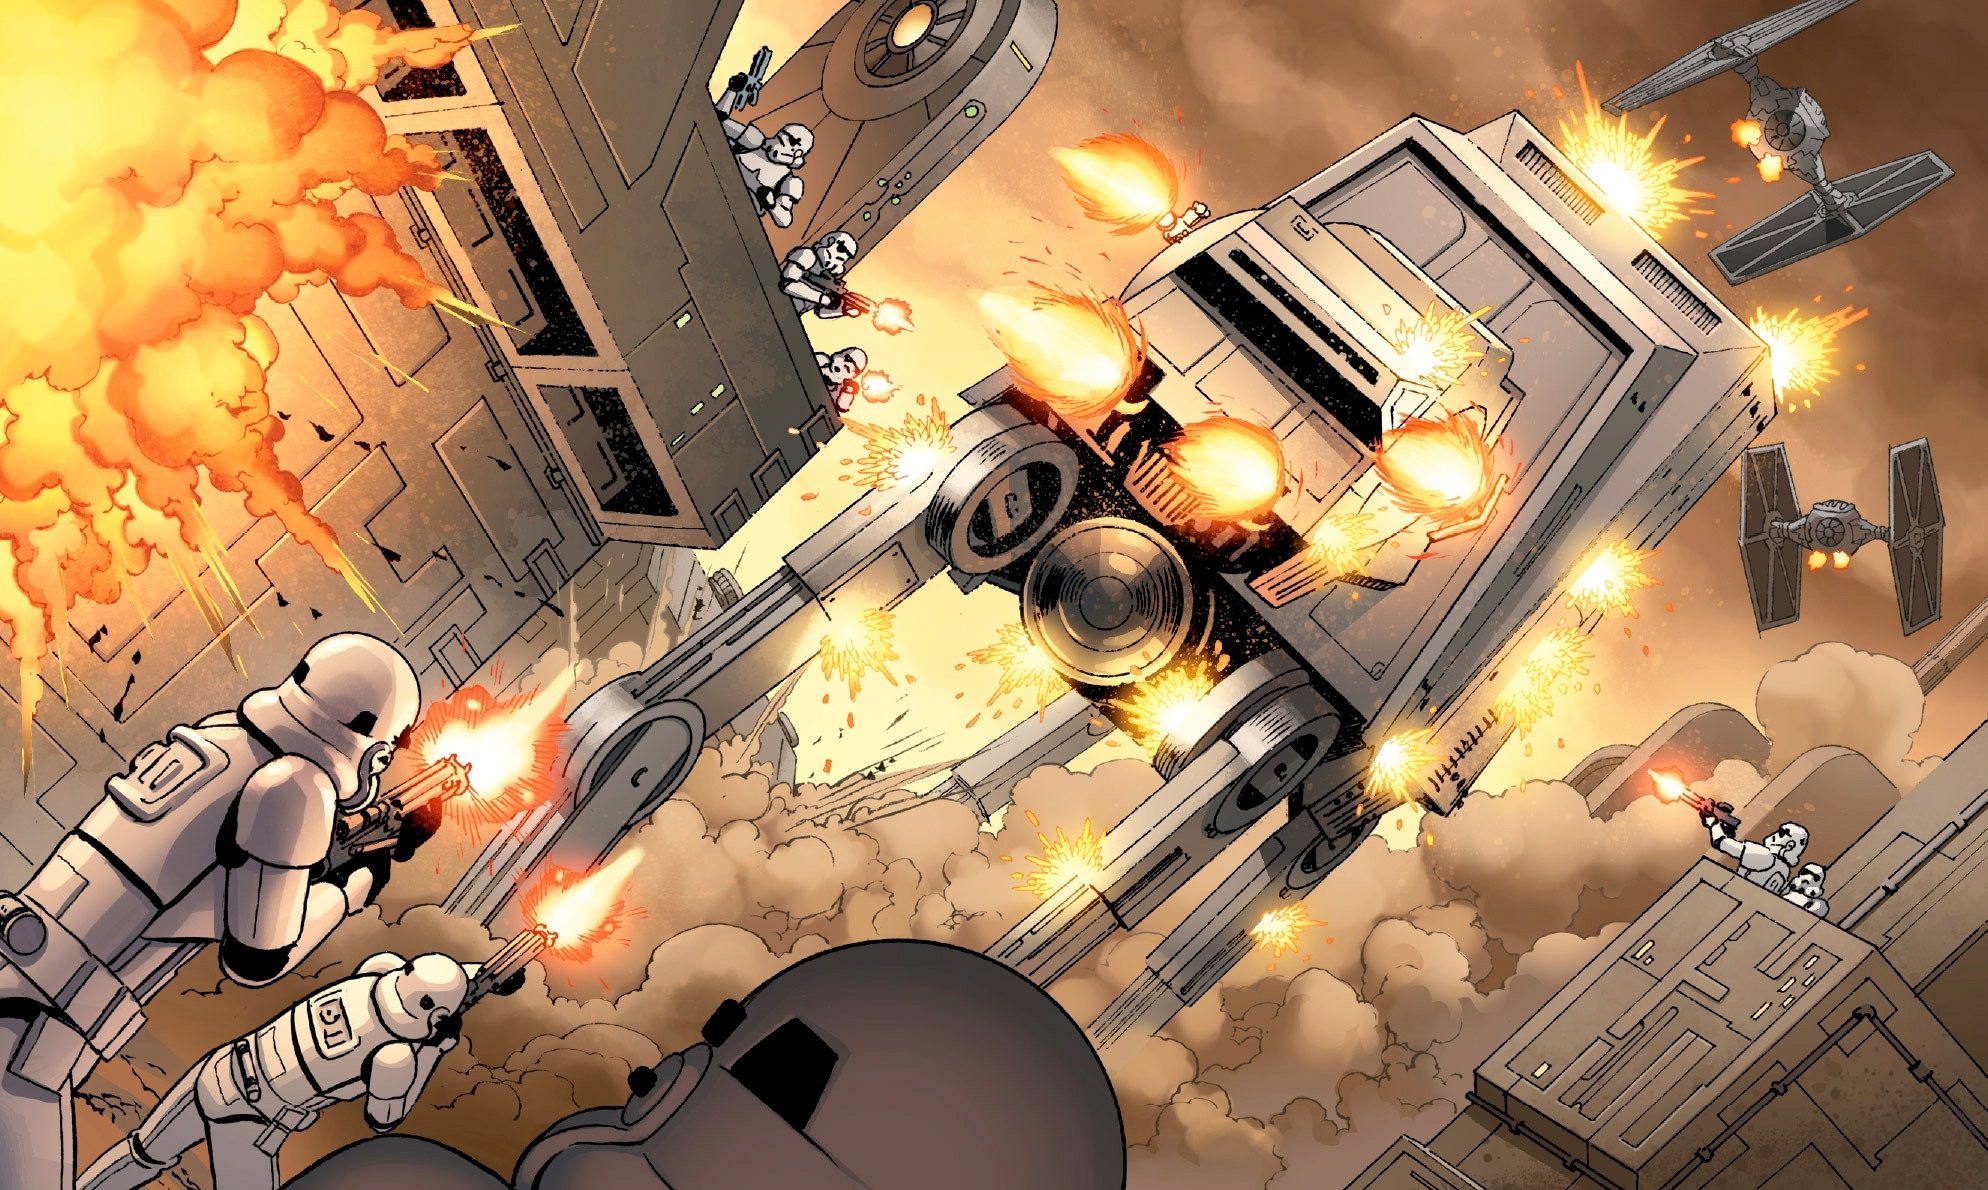 Plik:Imperialni atakuja rebeliantow na Cymoon 1.jpg